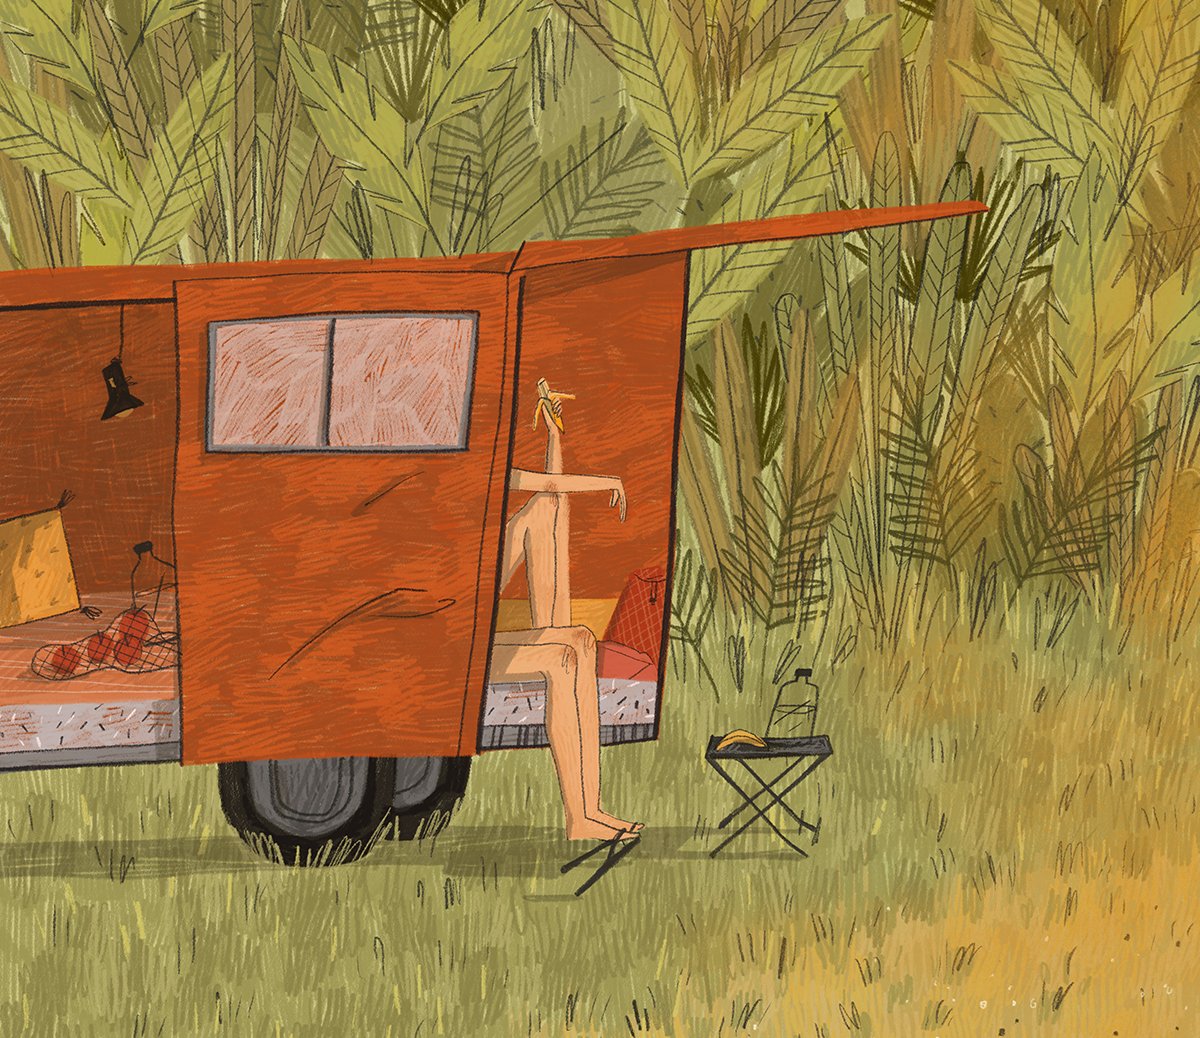 kitty-harris-day-29-camping-illustration.jpg